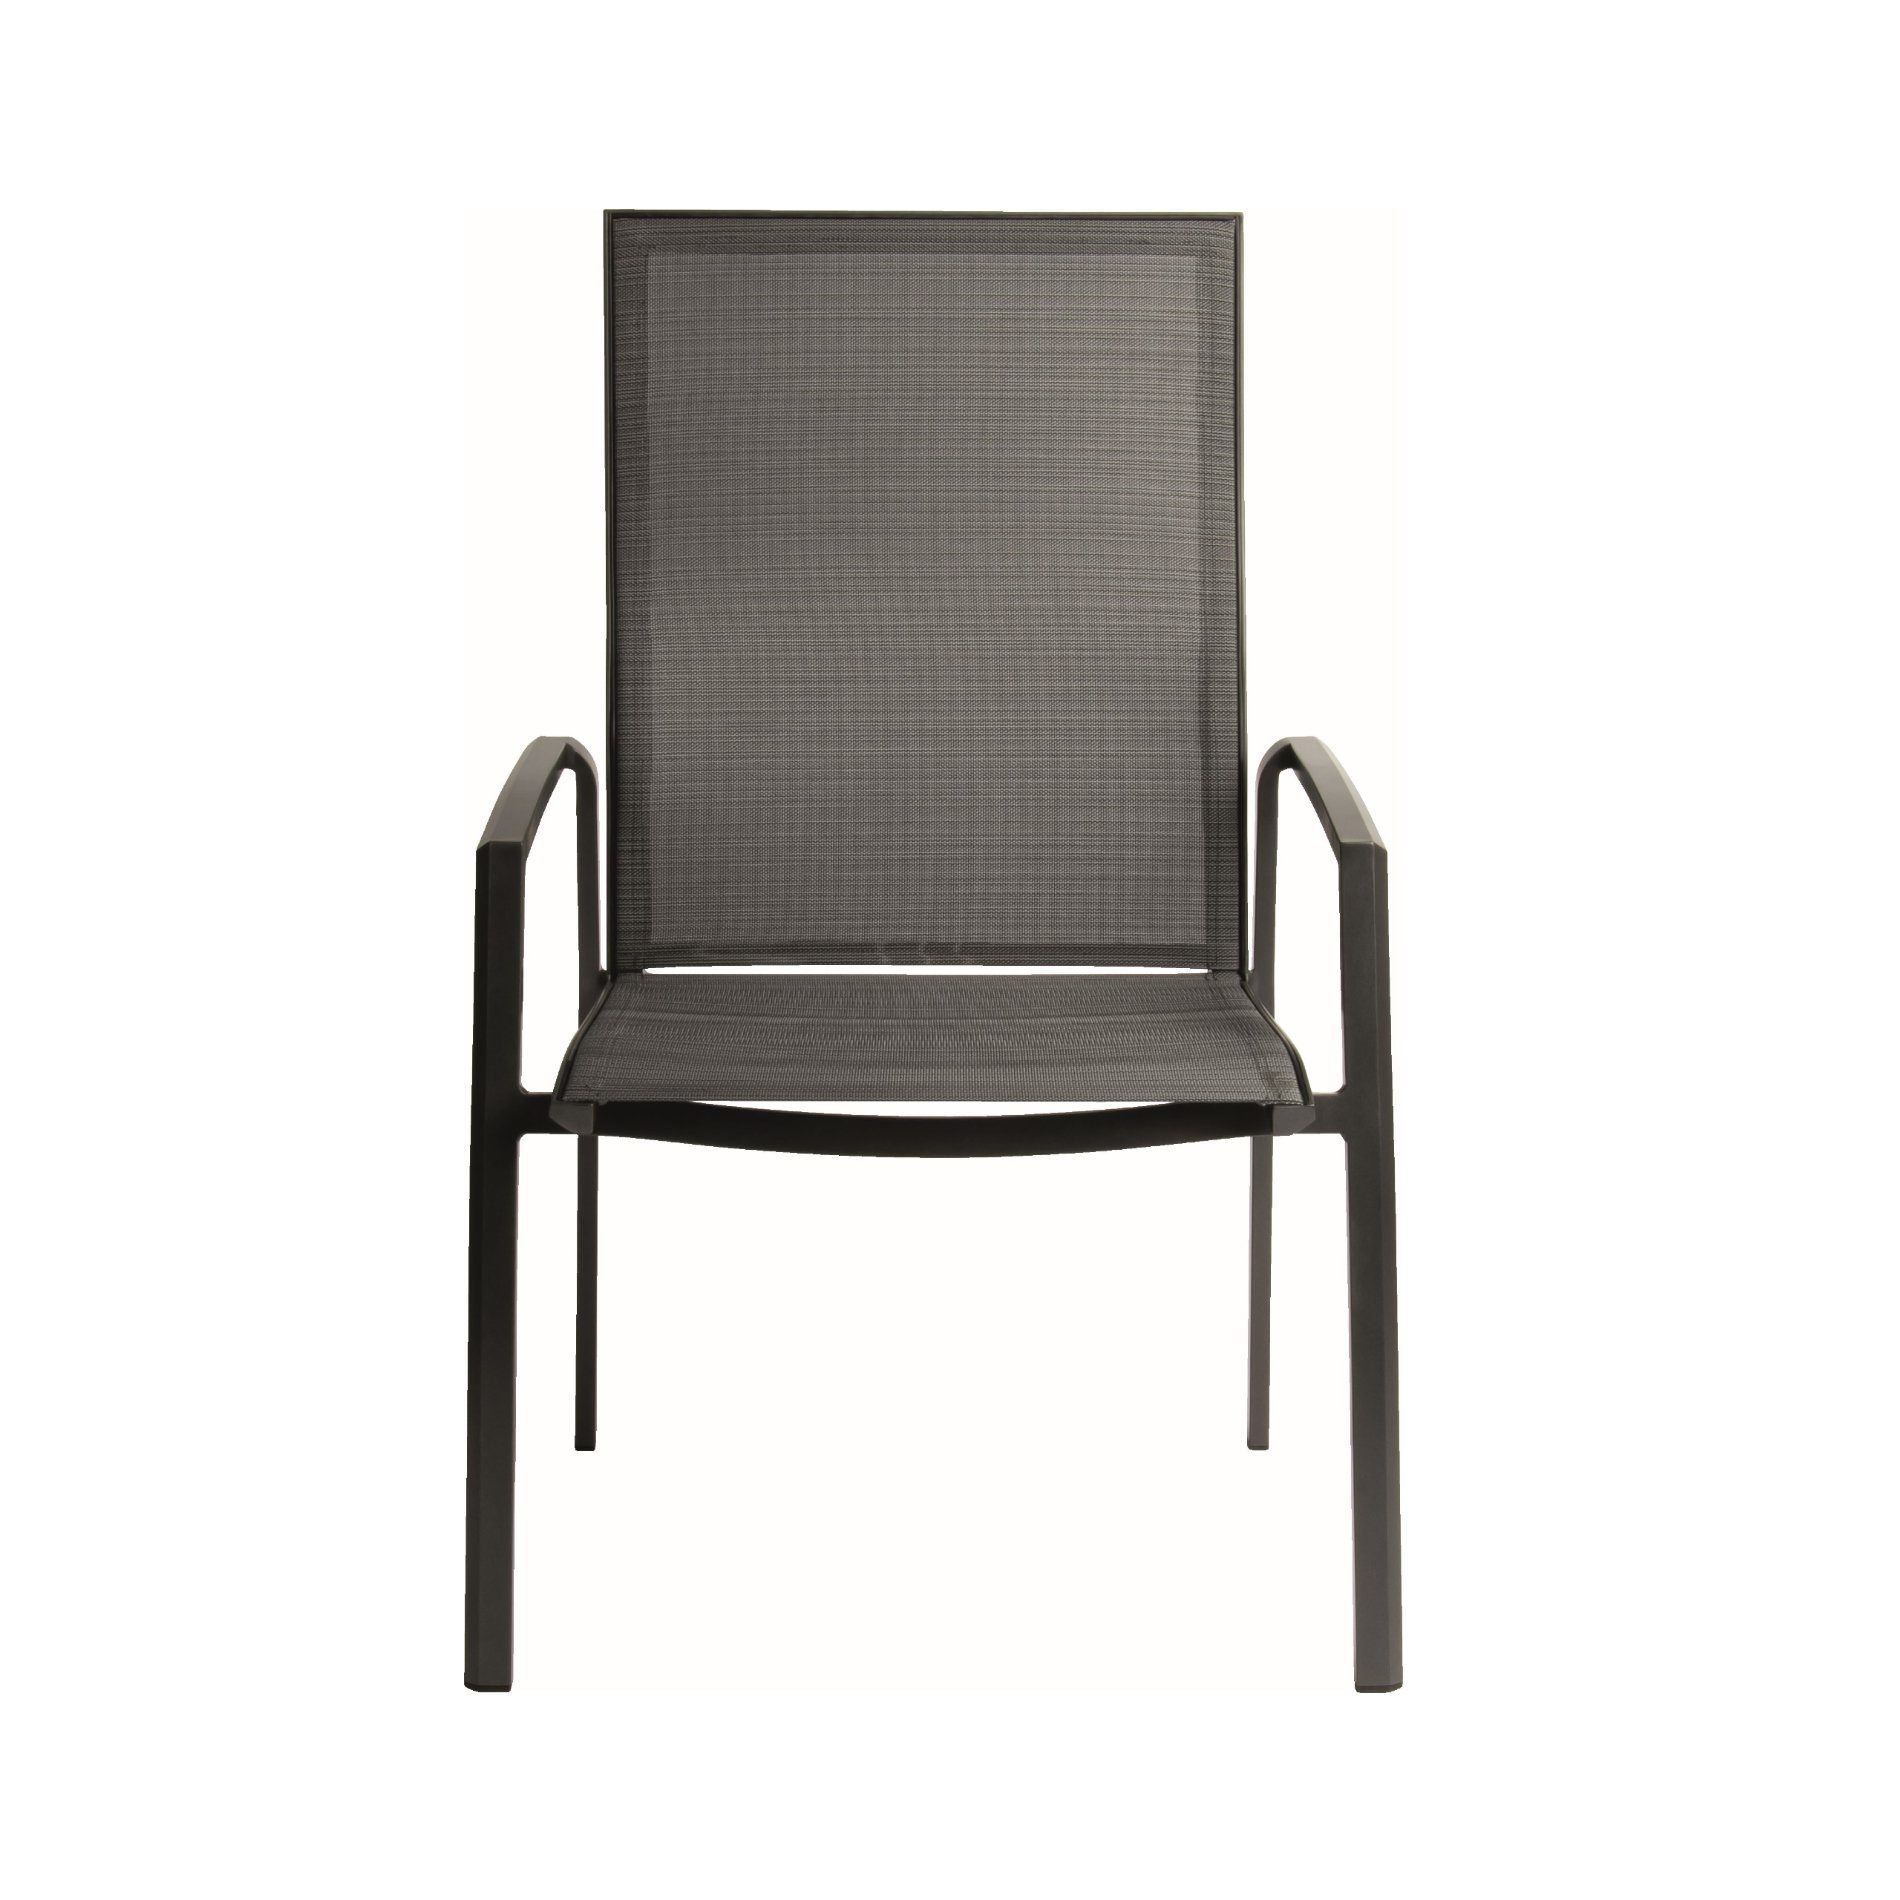 Stern "Kari+" Stapelsessel, Gestell Aluminium anthrazit, Sitzfläche Textilgewebe karbon